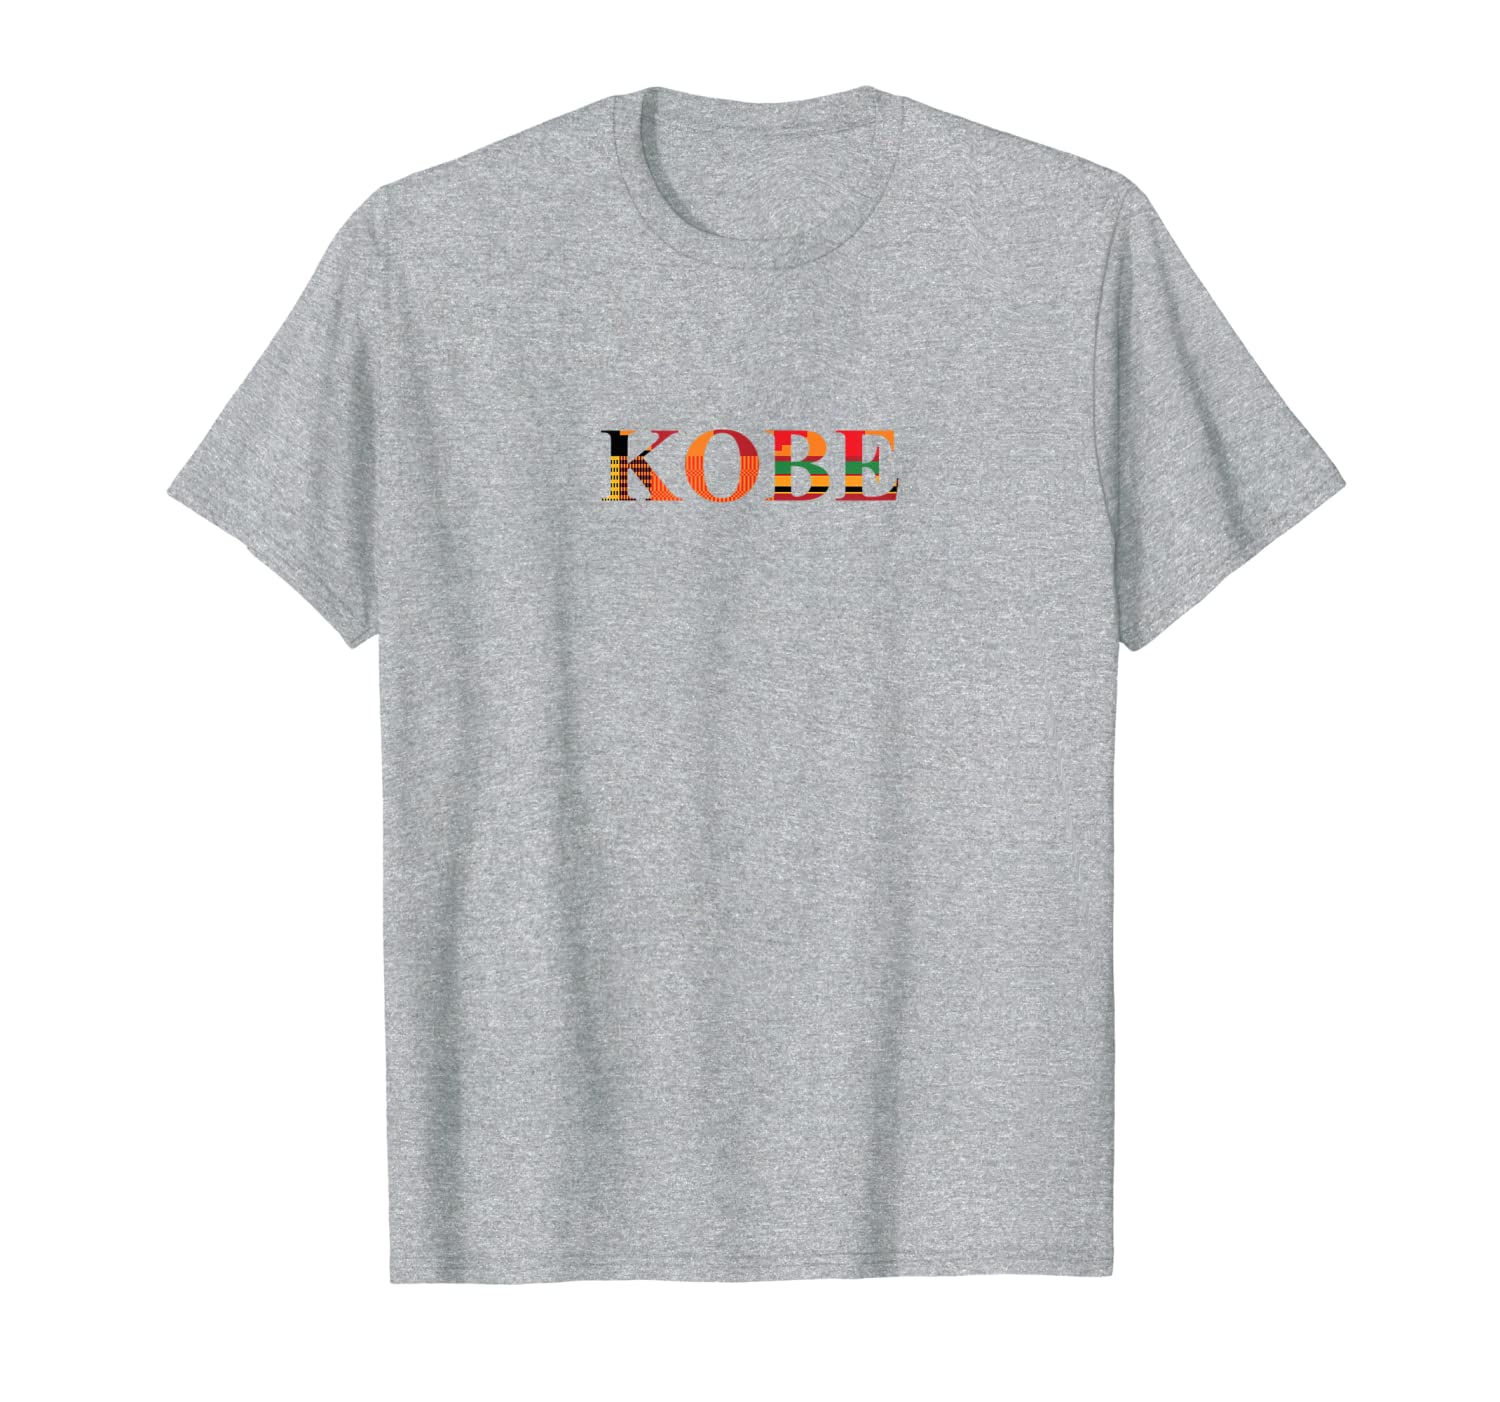 kobe shirt canada